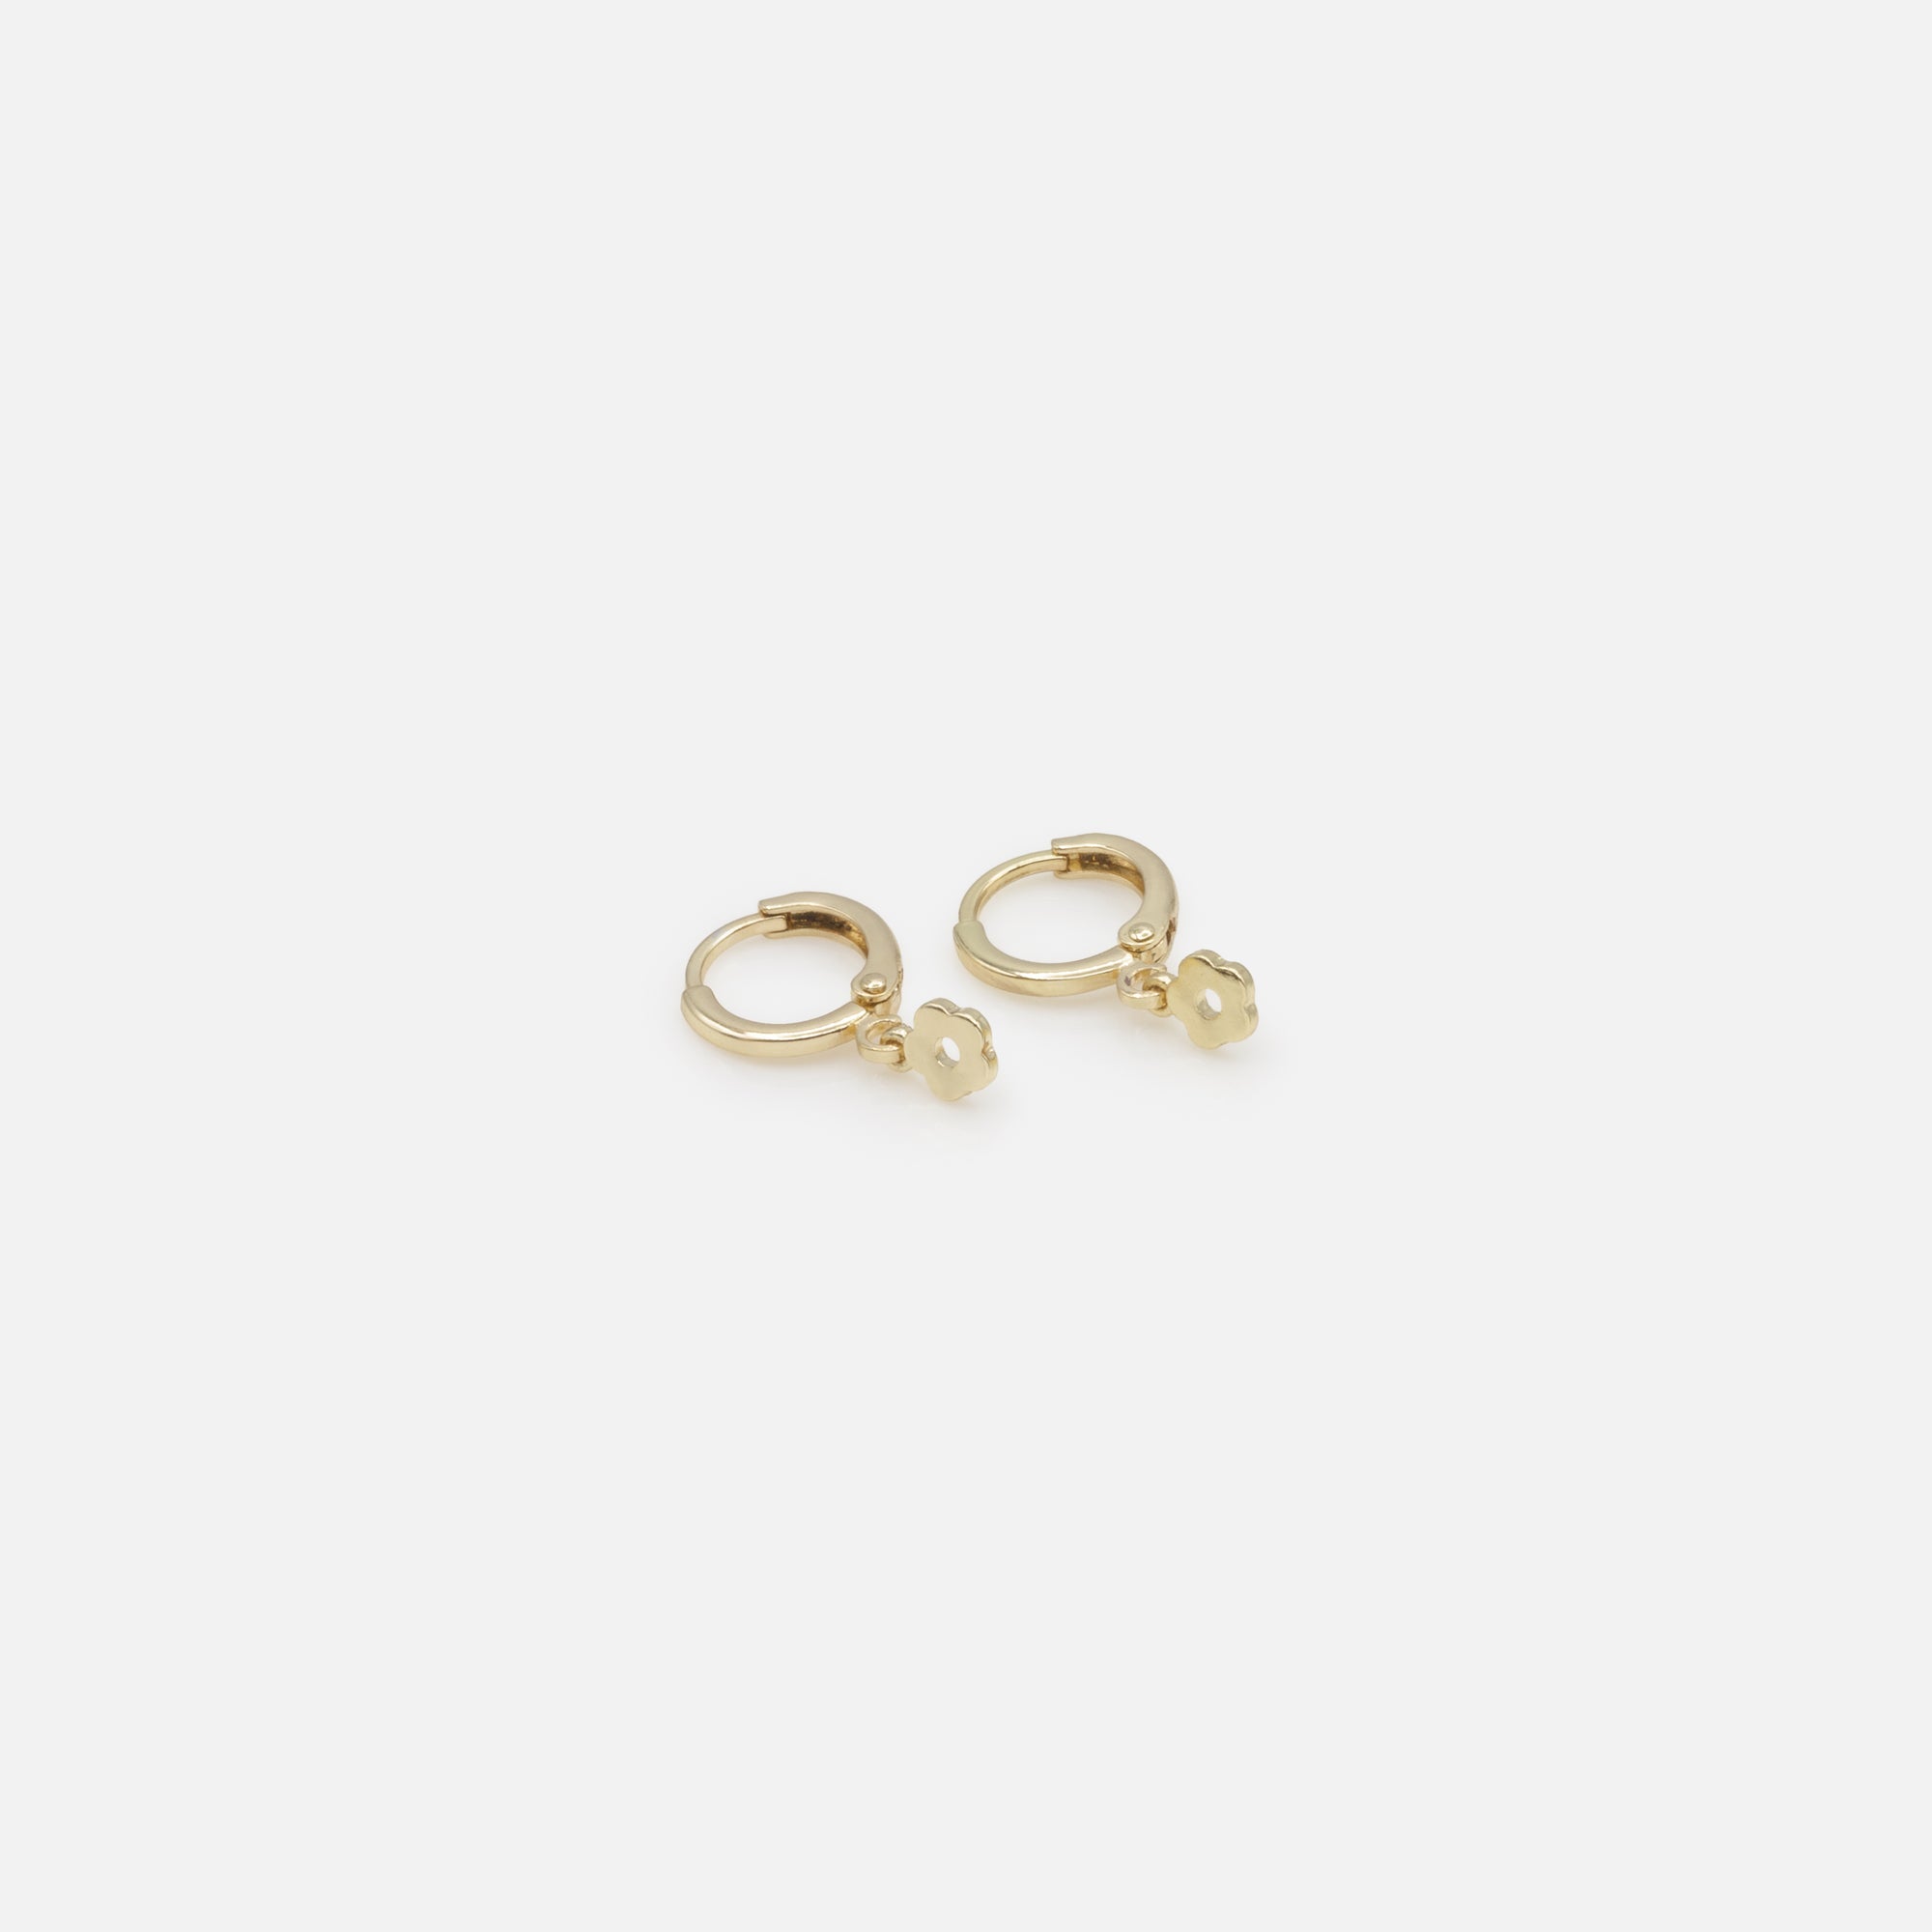 Duo of simple gold hoop earrings and flower charm